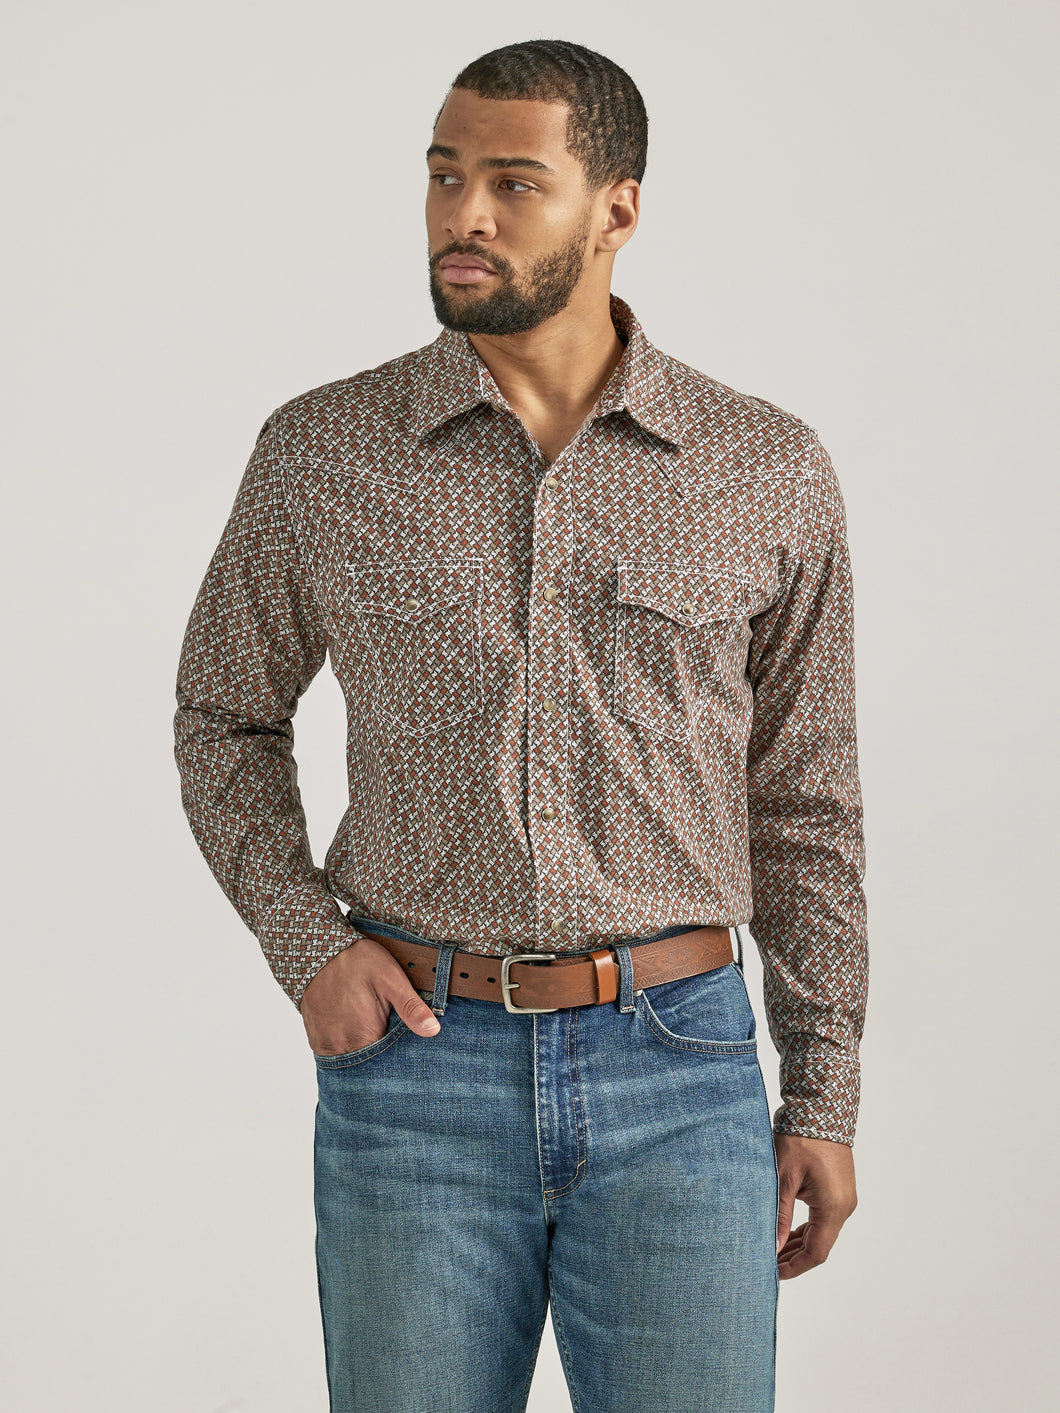 Pard's Western Shop Men's Wrangler 20X Competition Advanced Comfort Brown Geometric Print Western Snap Shirt